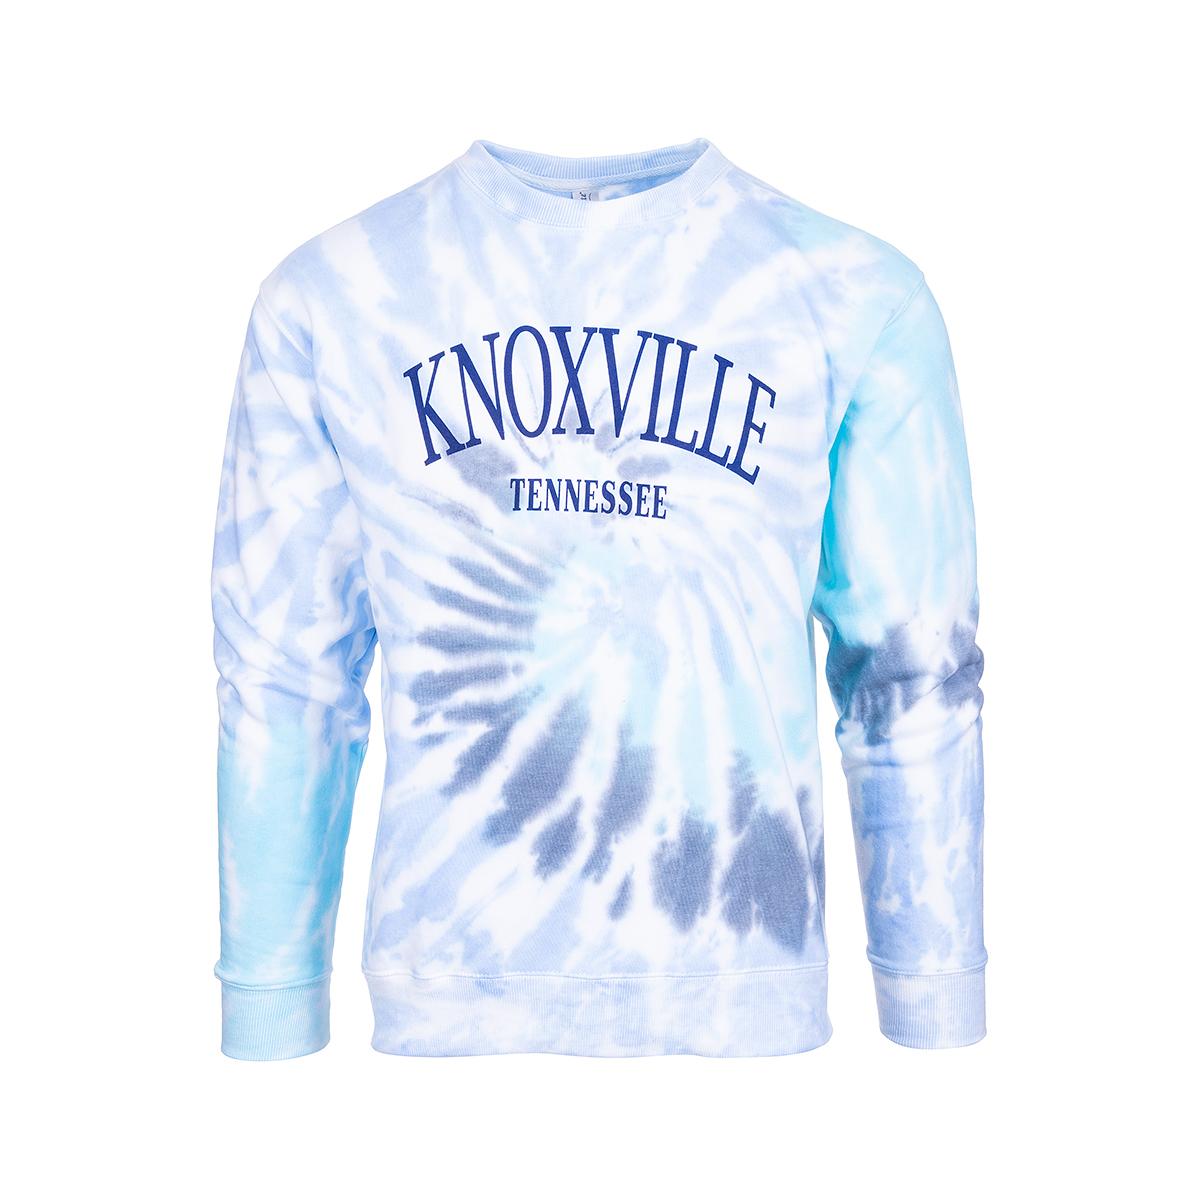  Knoxville Tie Dye Crew Neck Knit Sweatshirt